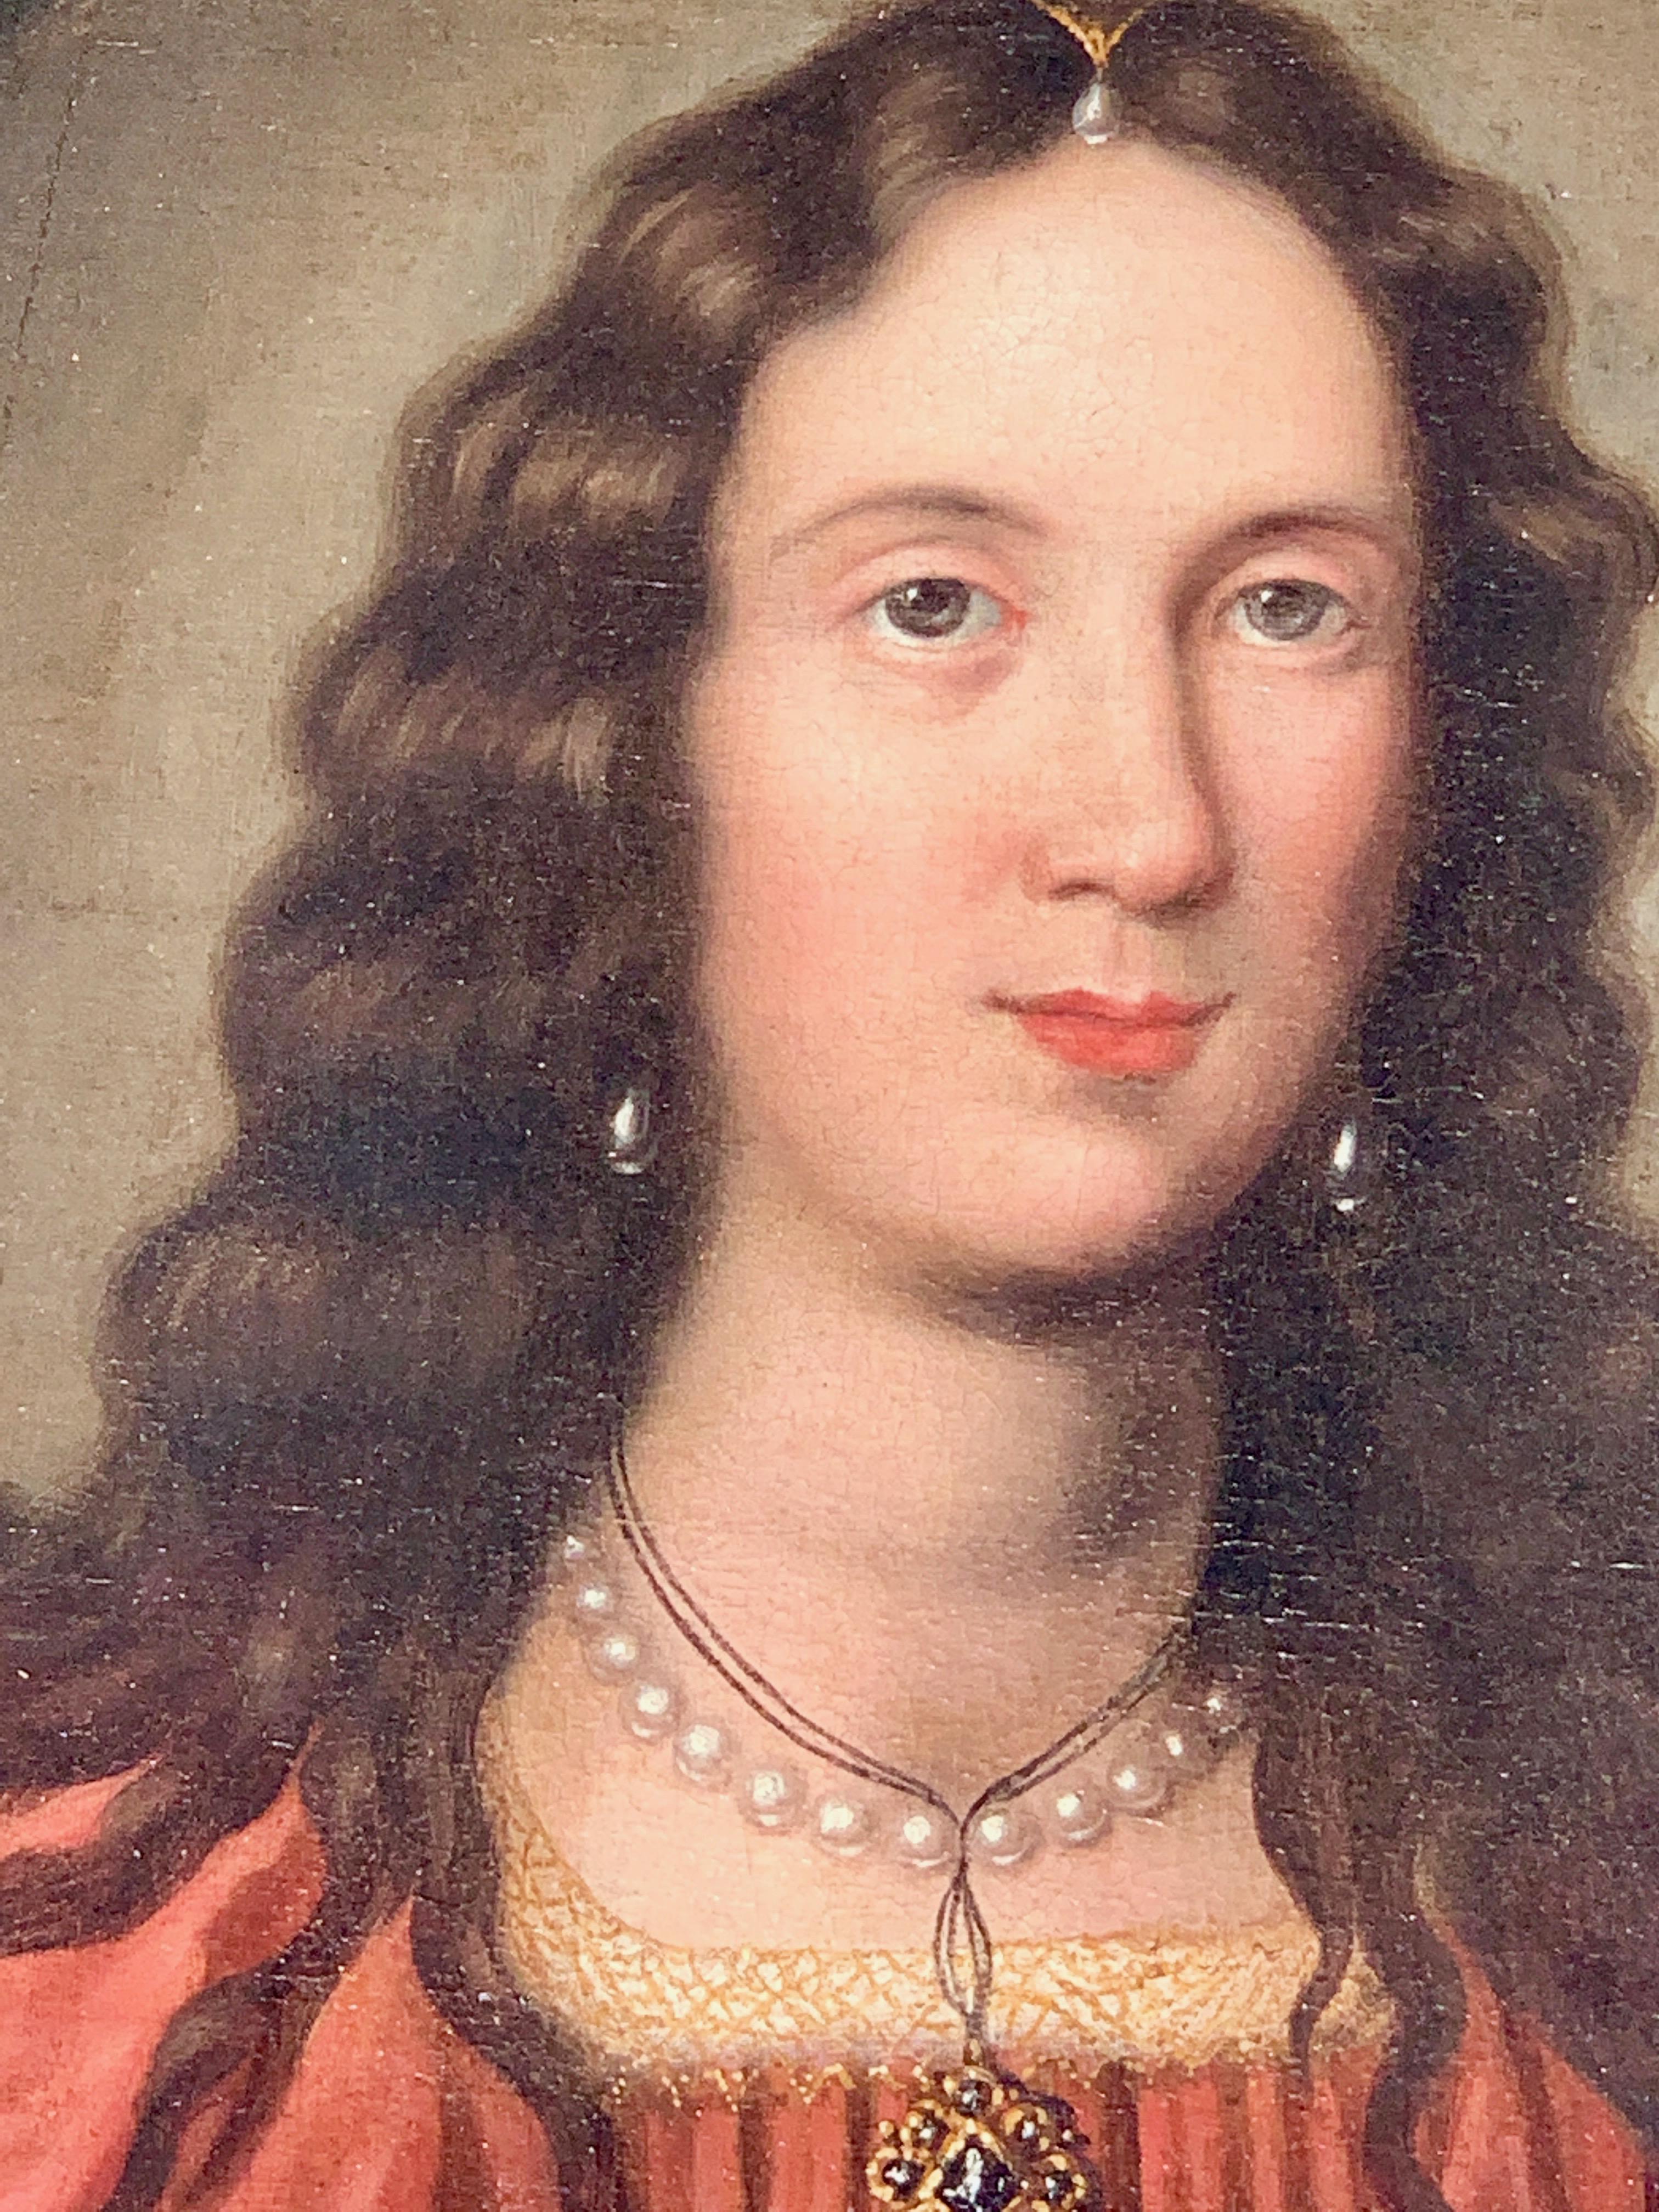 17th century portraits